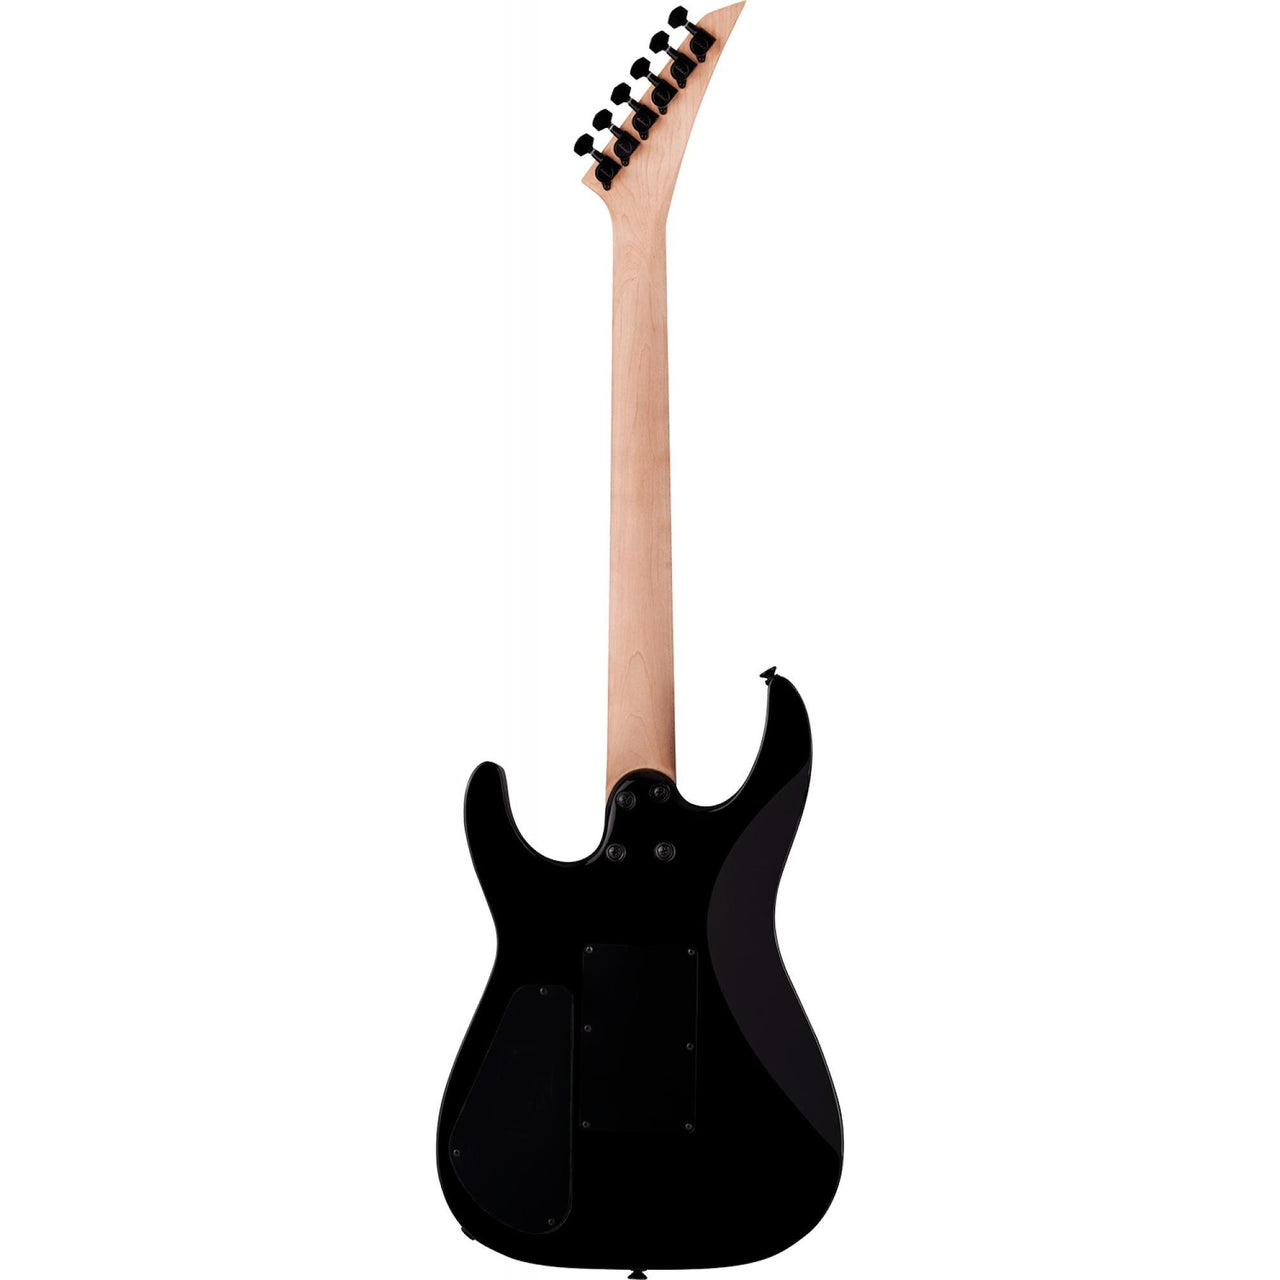 Guitarra Jackson Dk3xr Hss Electrica Black 2910022503